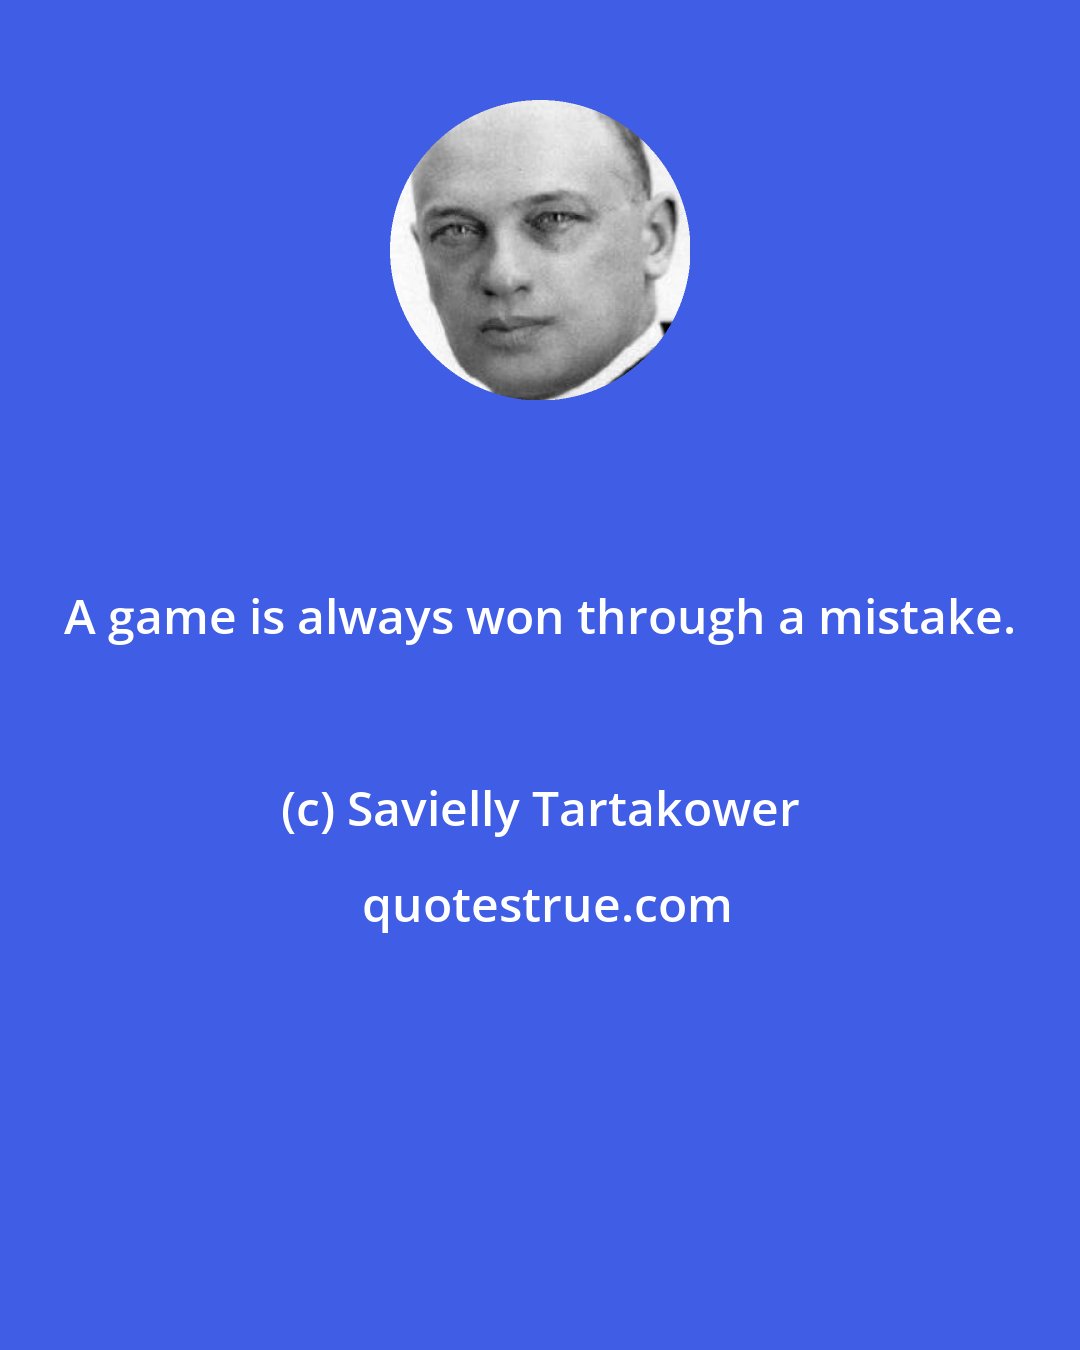 Savielly Tartakower: A game is always won through a mistake.